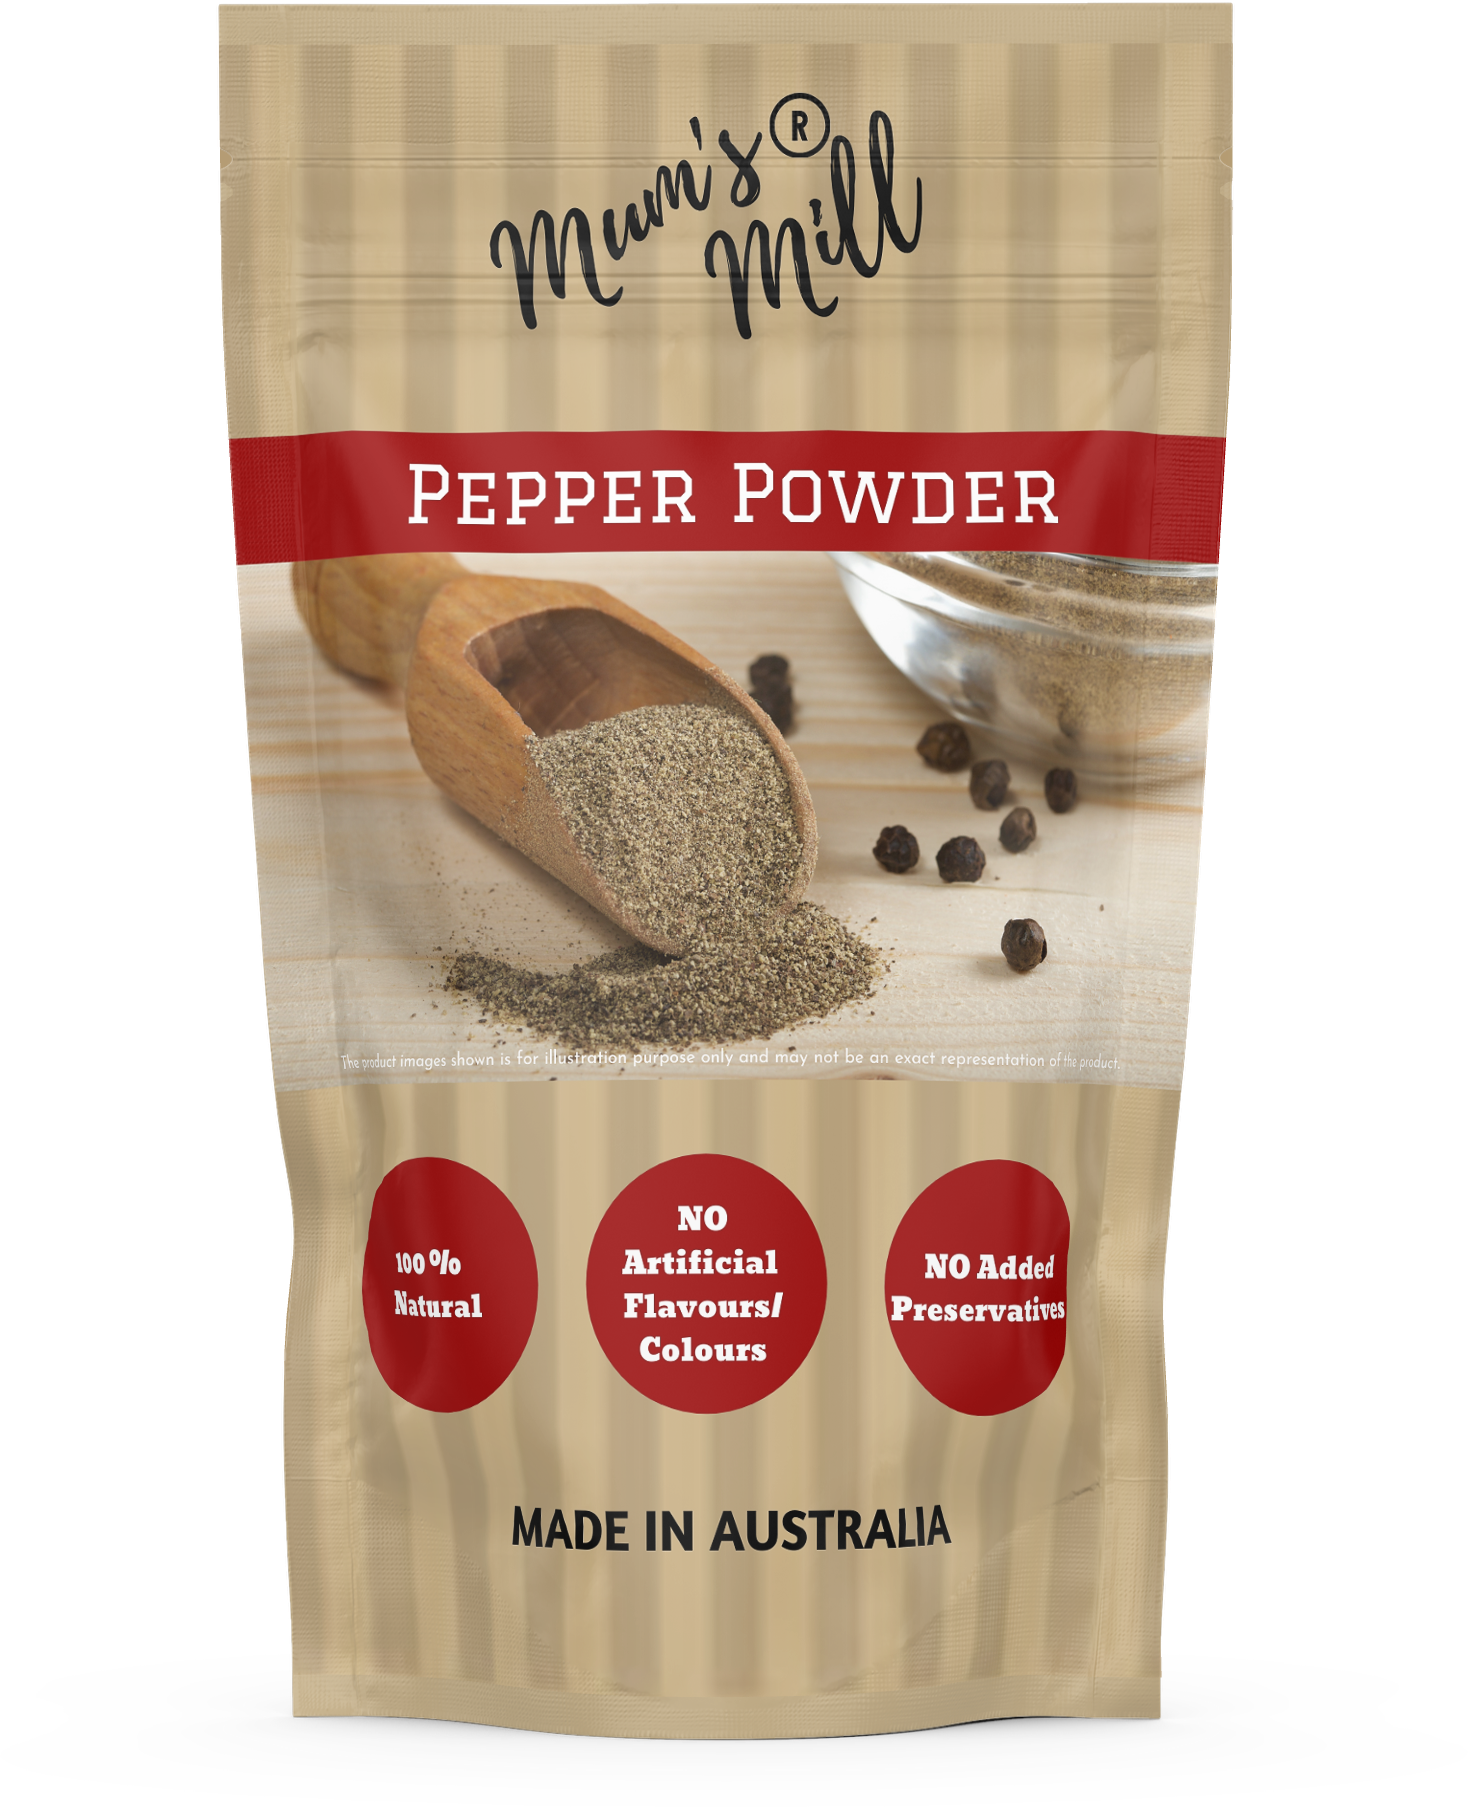 Mum's Mill Pepper Powder